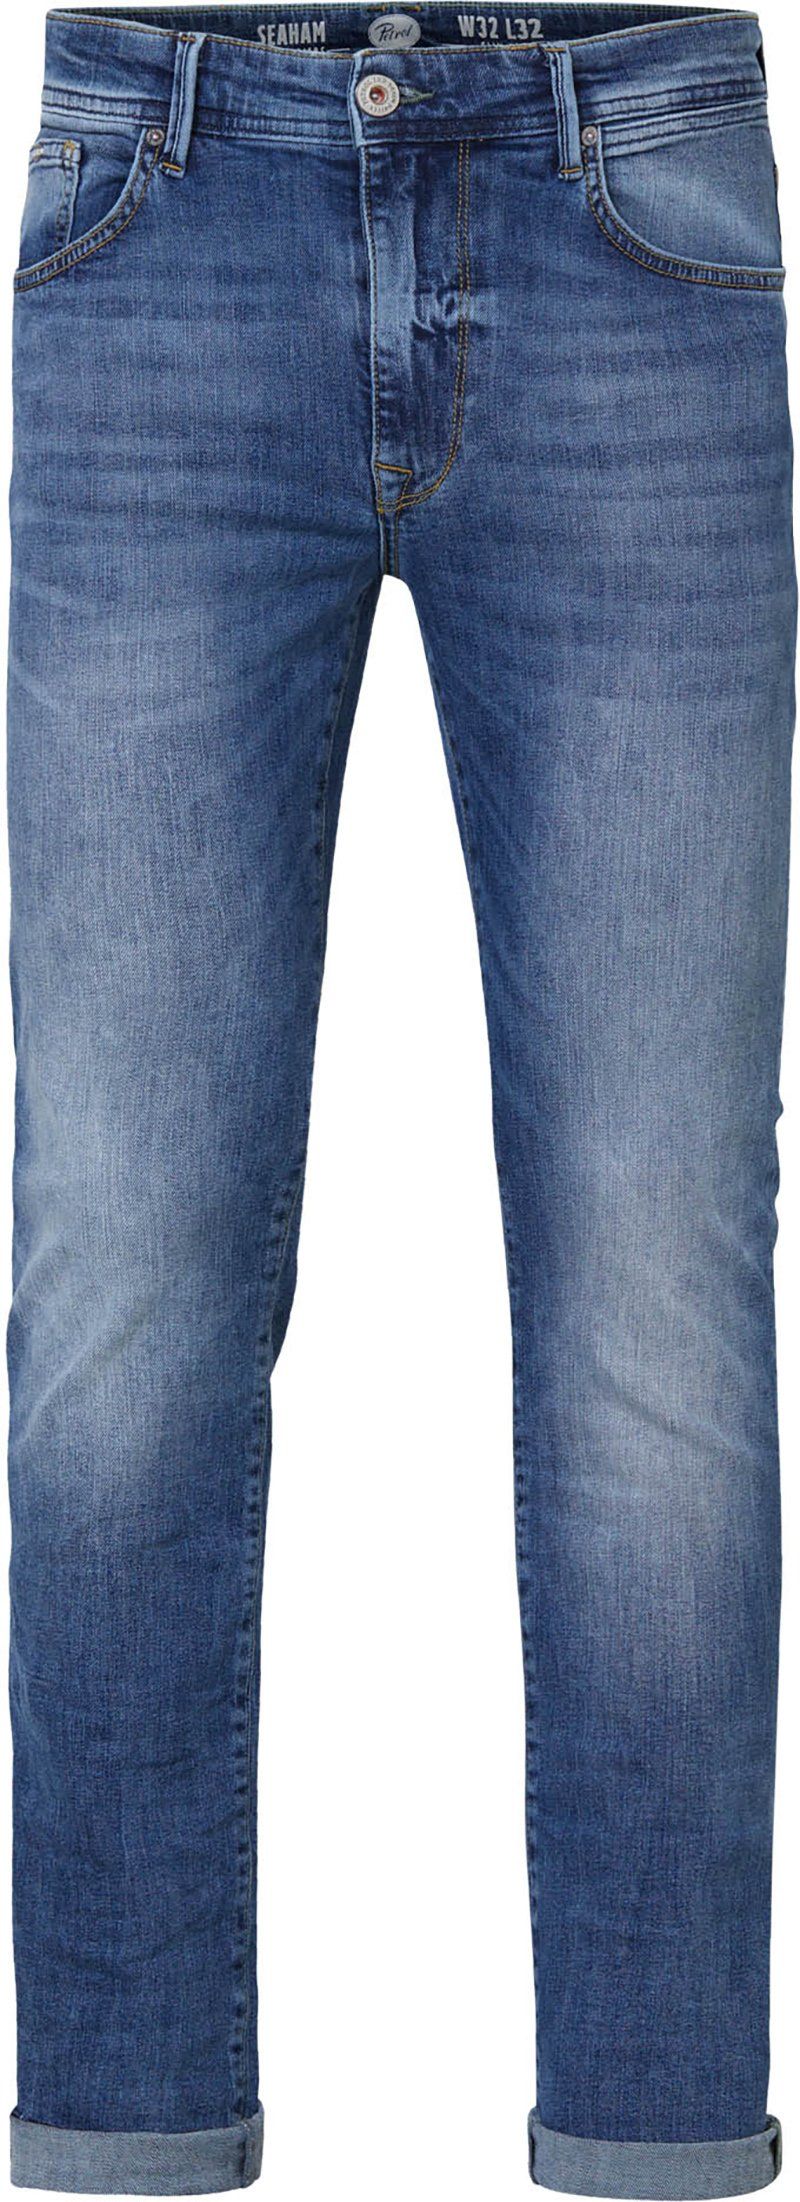 Petrol Seaham Jeans Indigo Blue - Größe W 29 - L 32 von Petrol